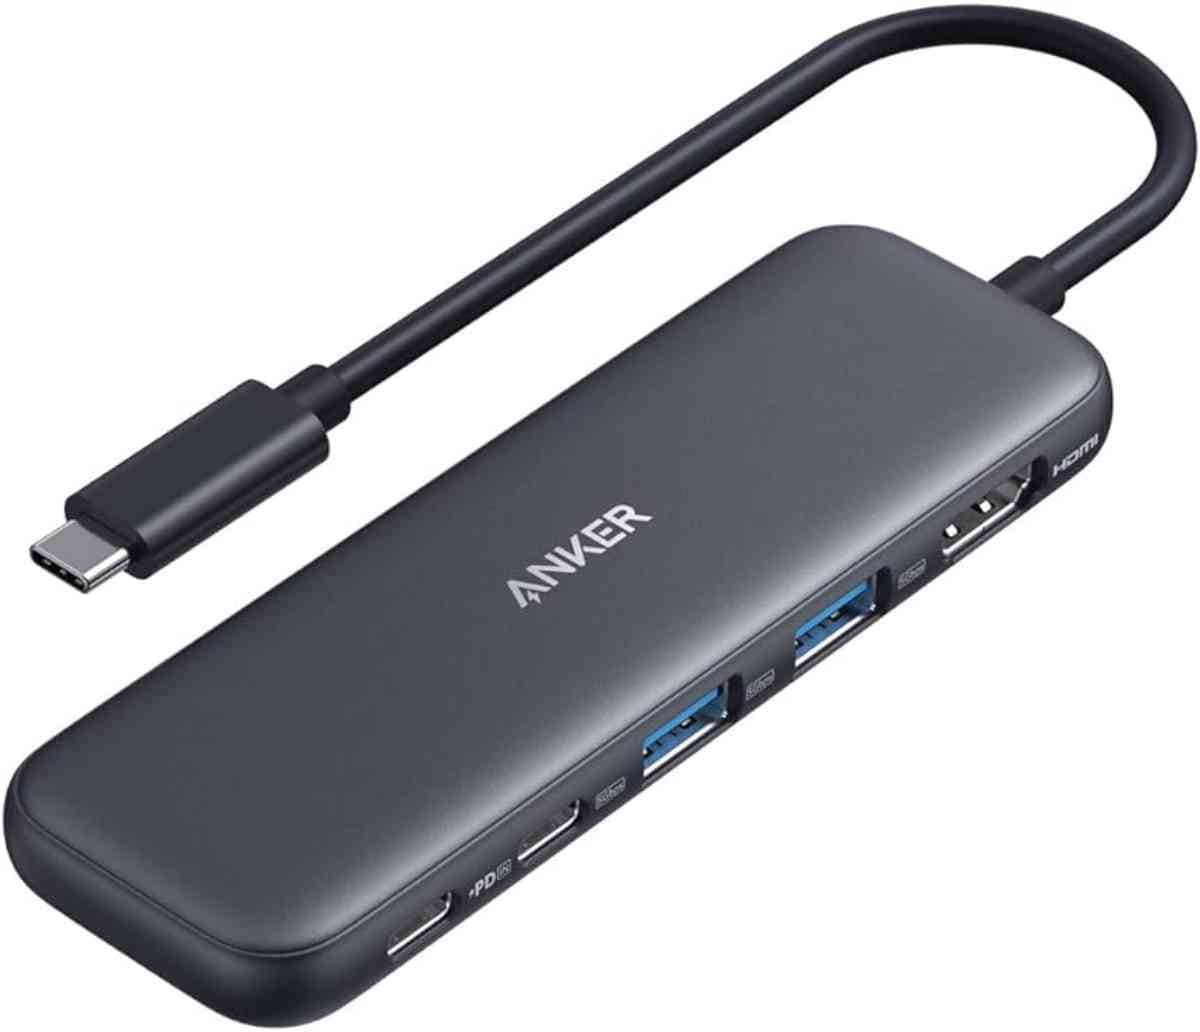 「Anker 332 USB-C ハブ (5-in-1)」 